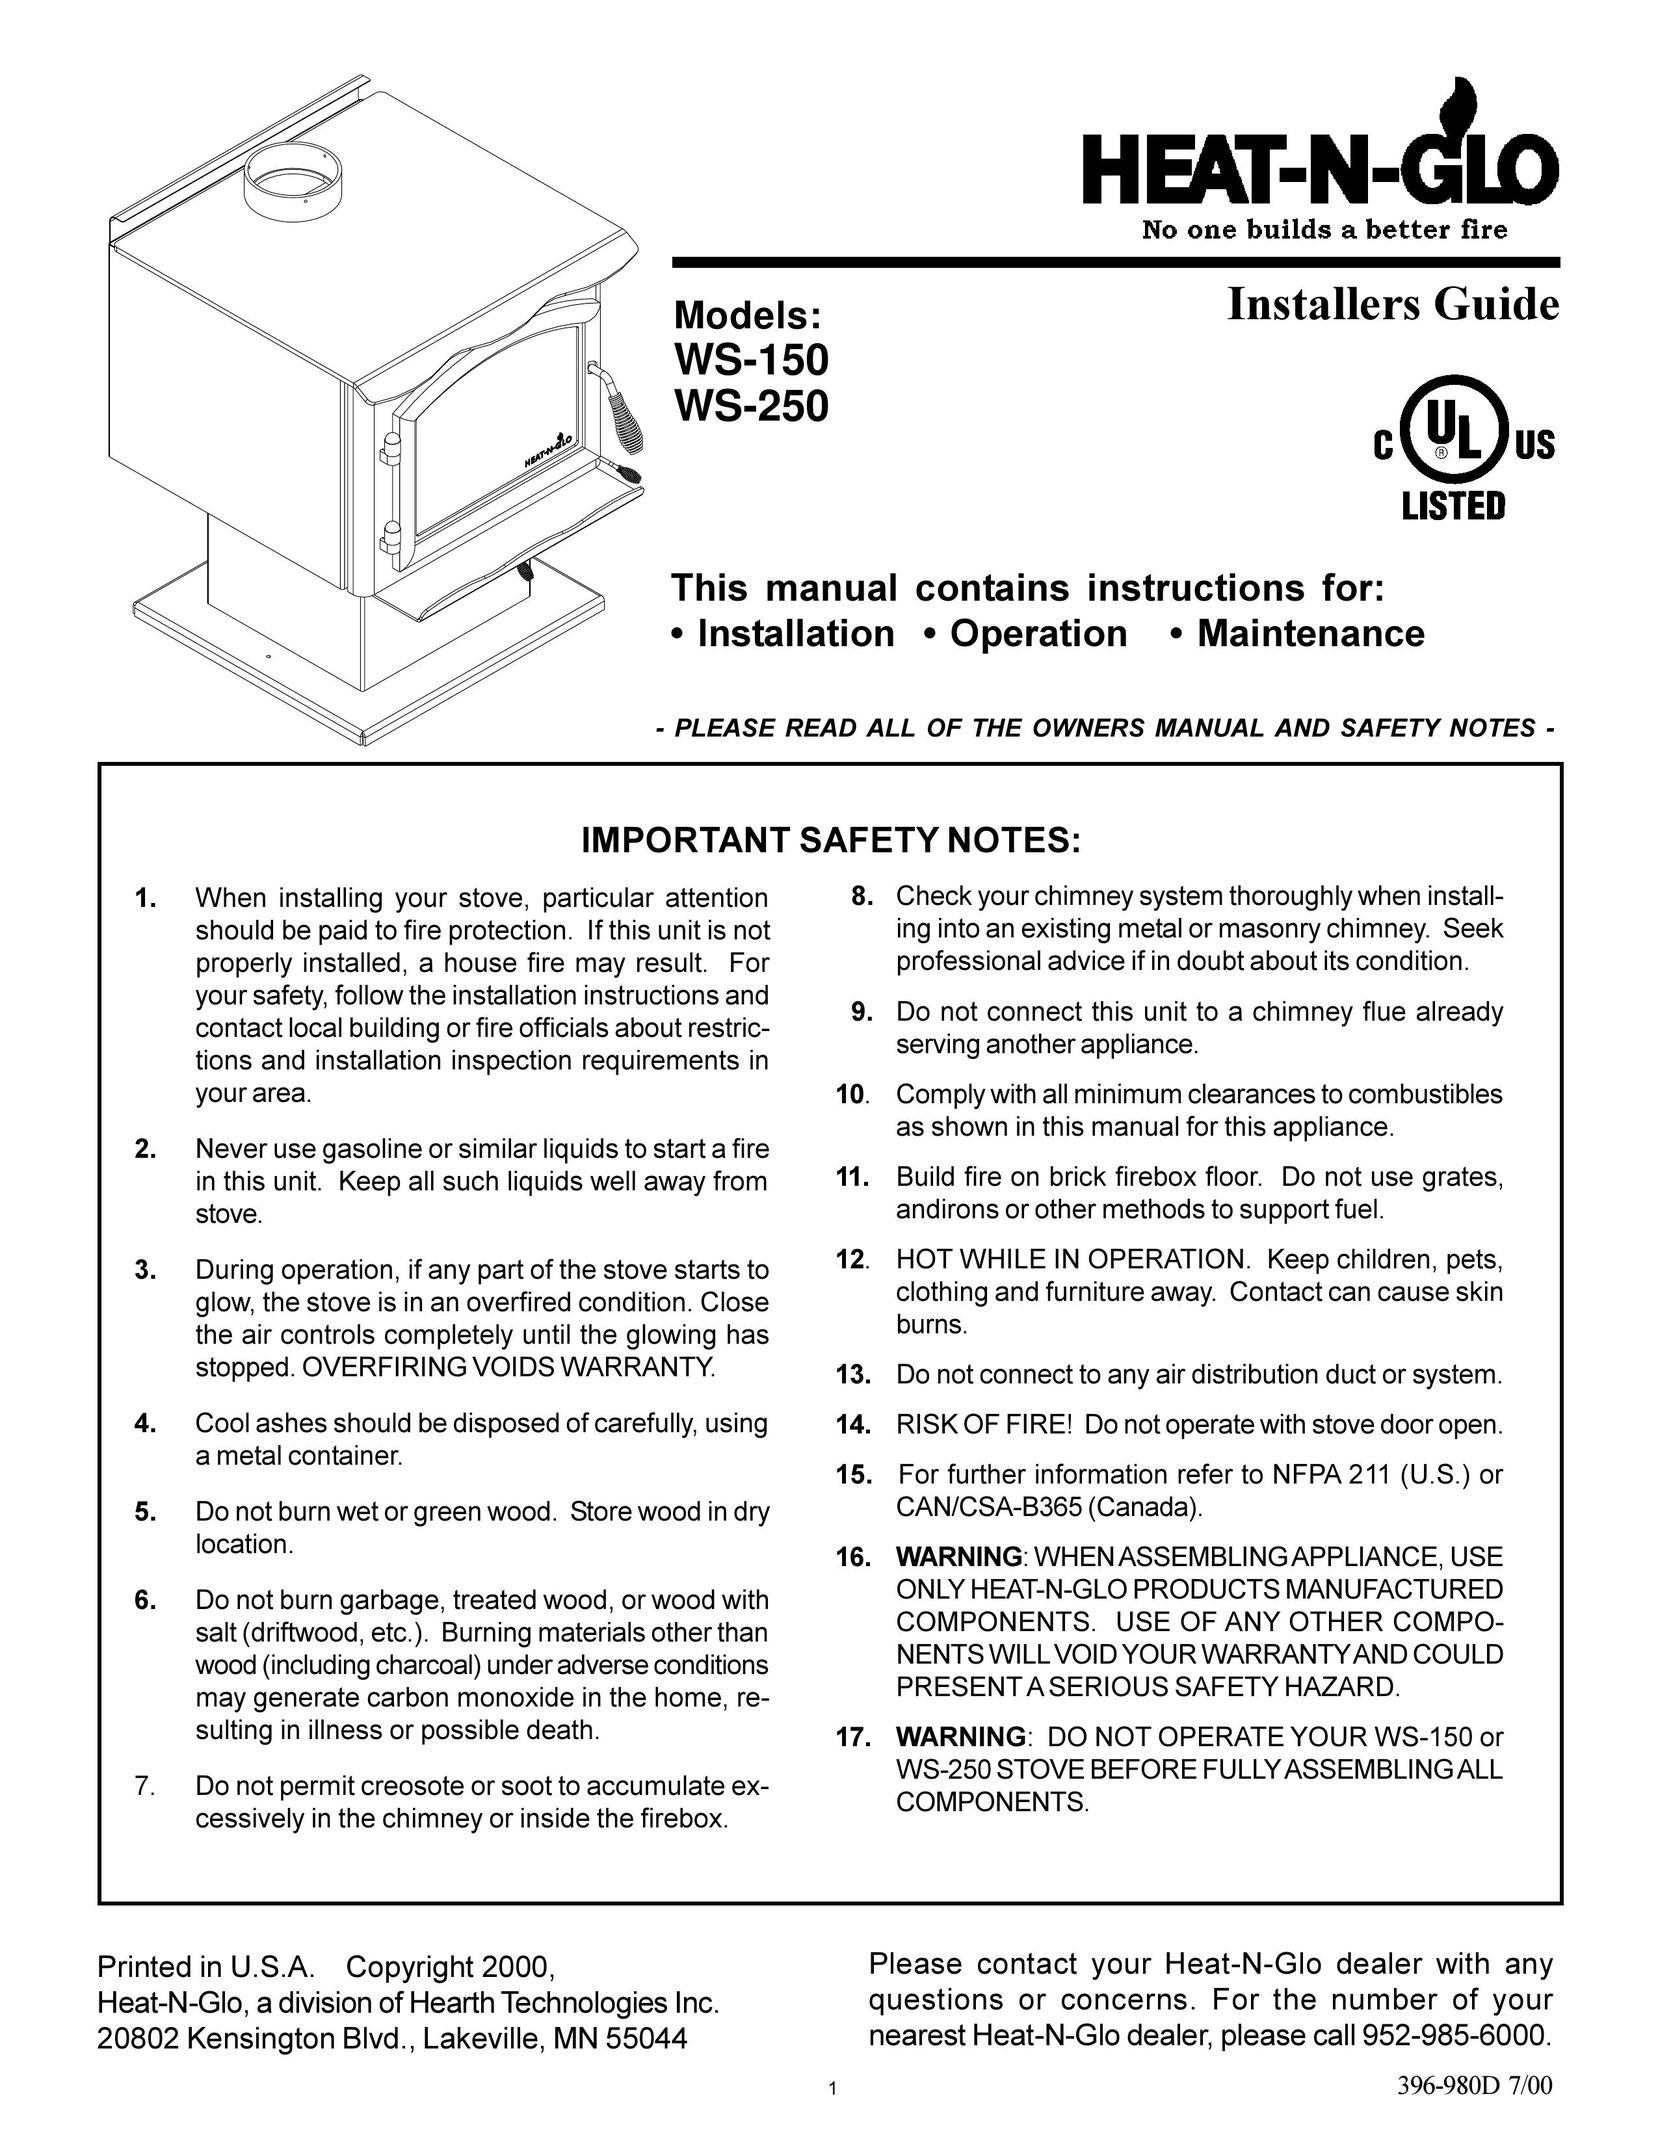 Heat & Glo LifeStyle WS-250 Stove User Manual